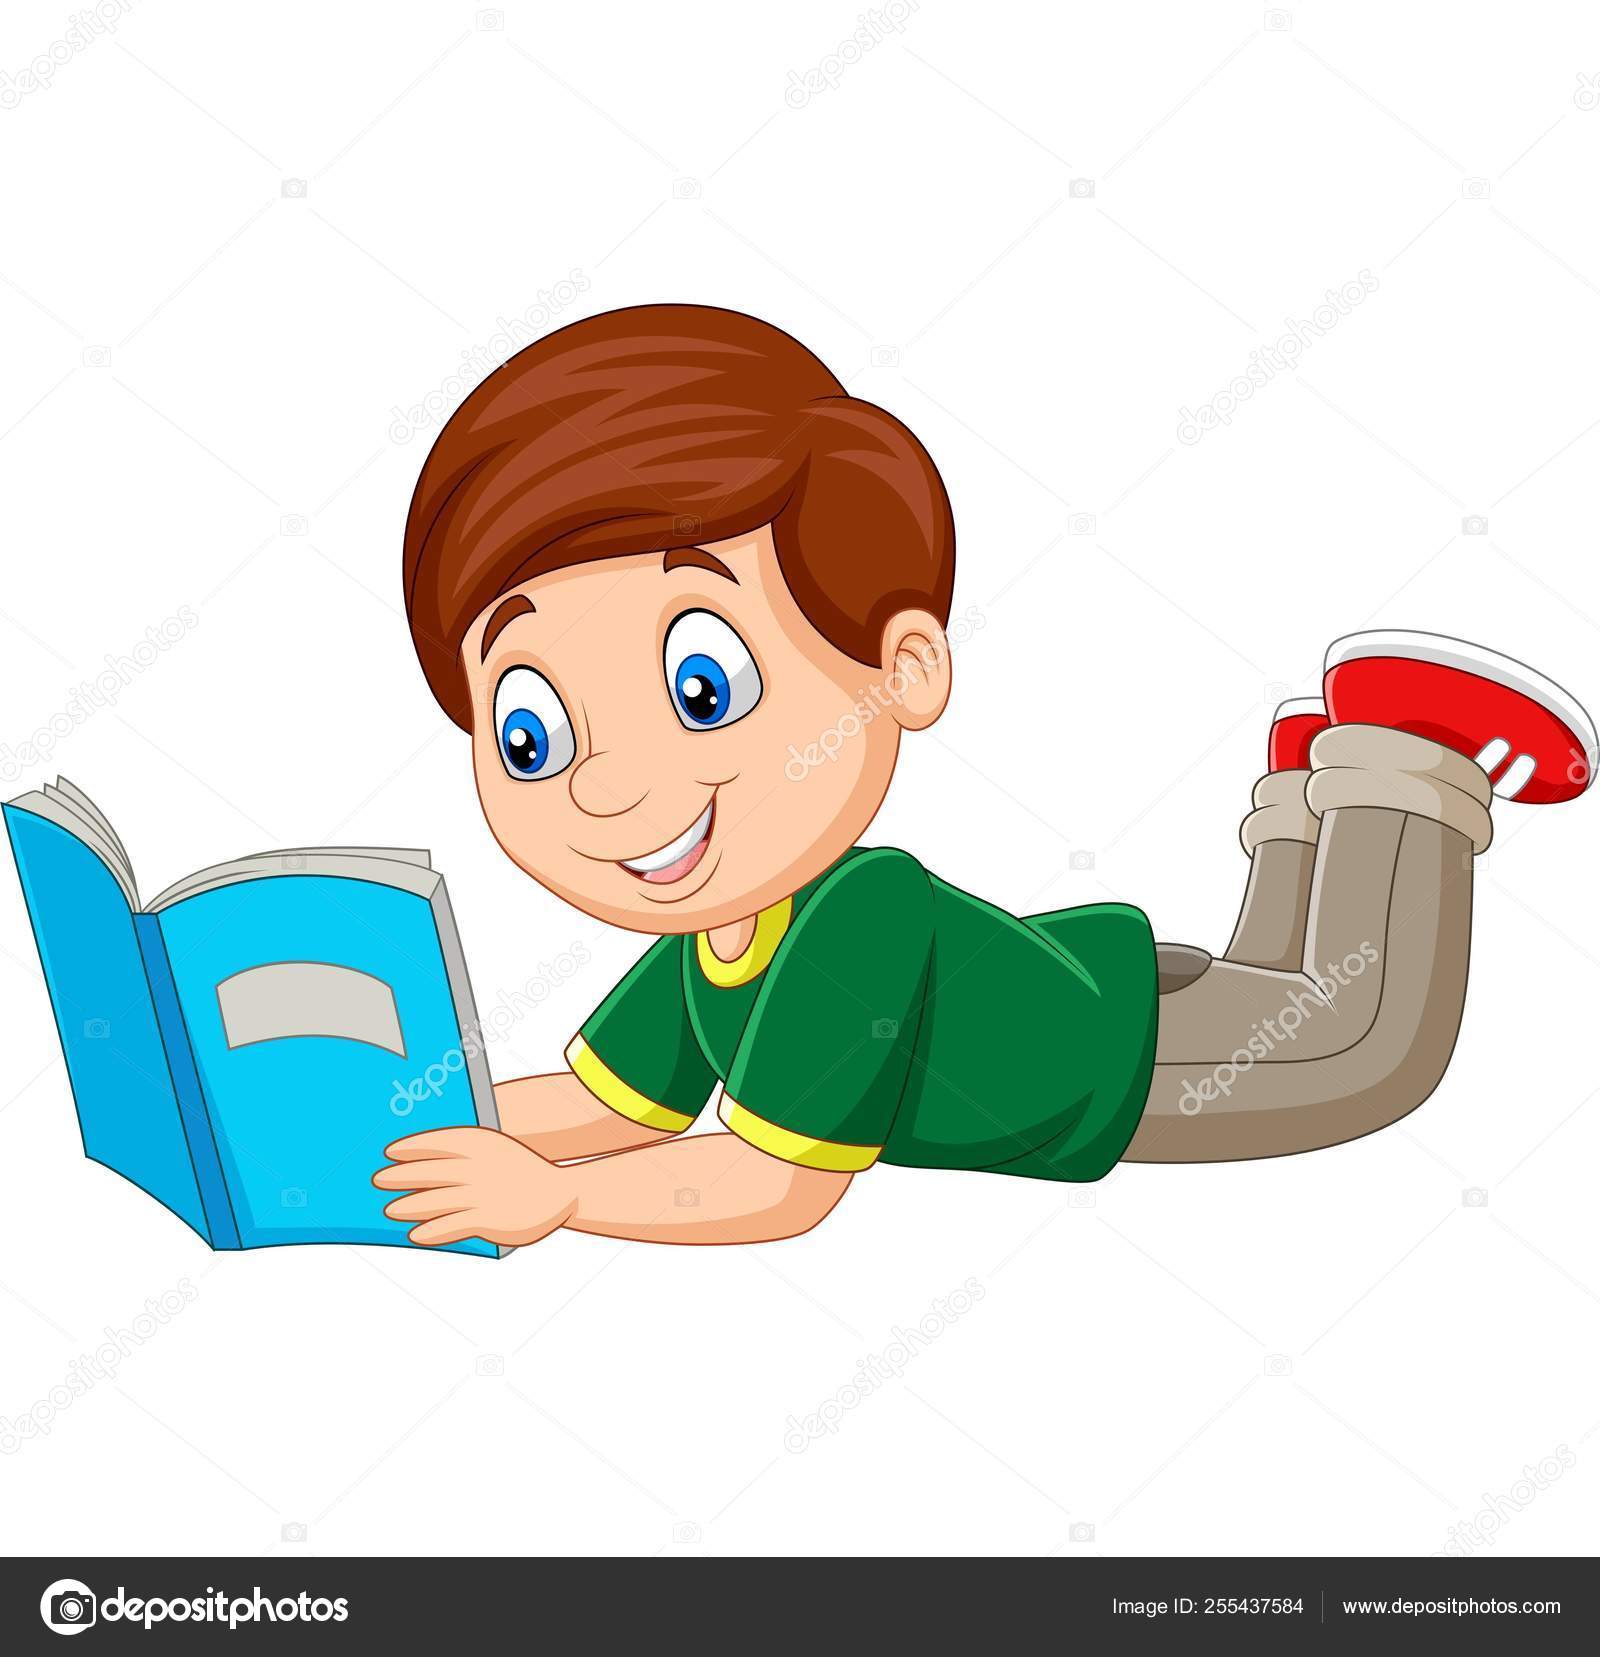 Boy With Glasses Reading Book Cartoon Vector Clipart FriendlyStock ...